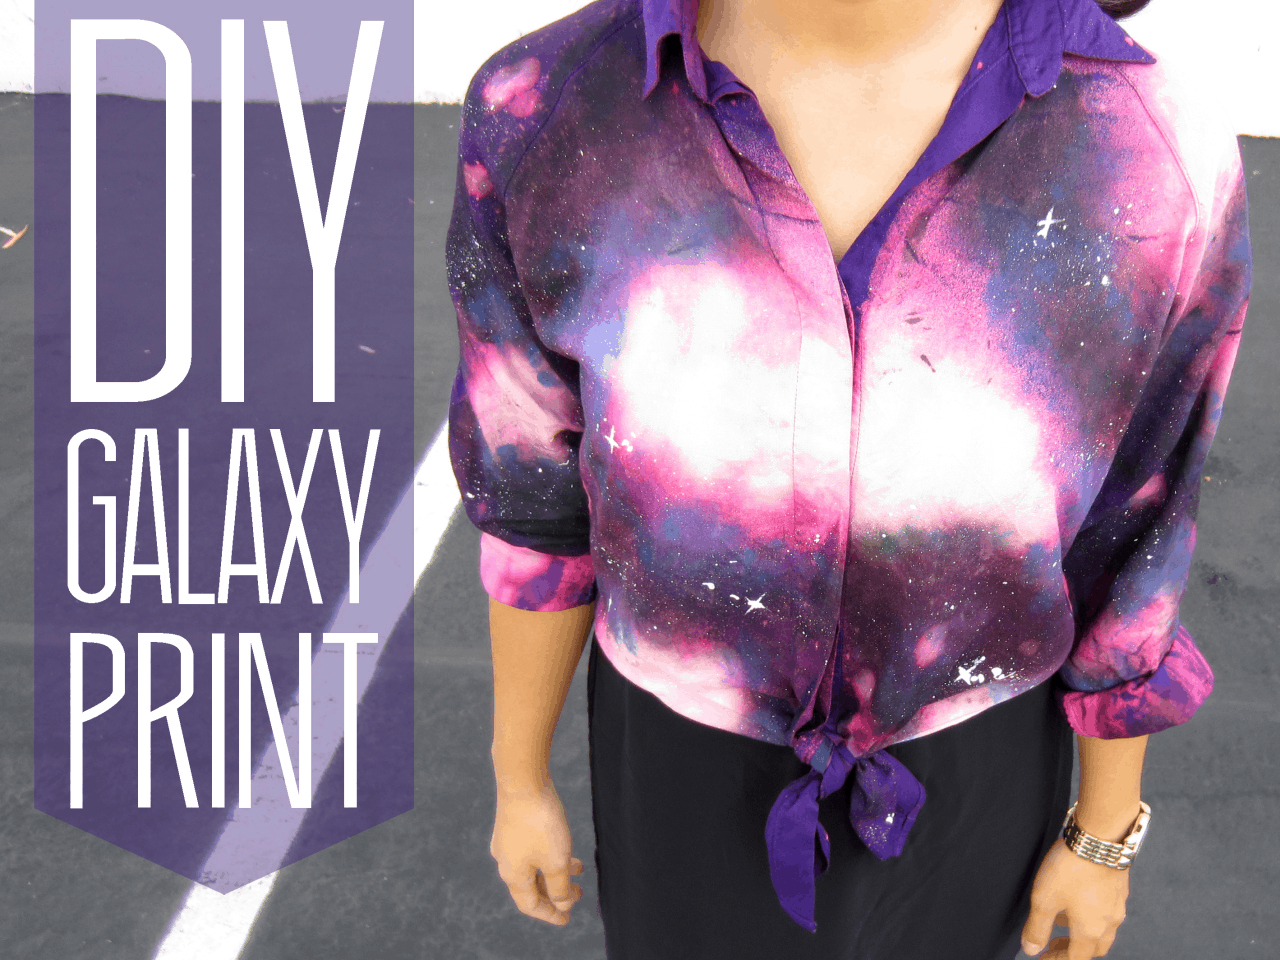 Diy galaxy print shirt